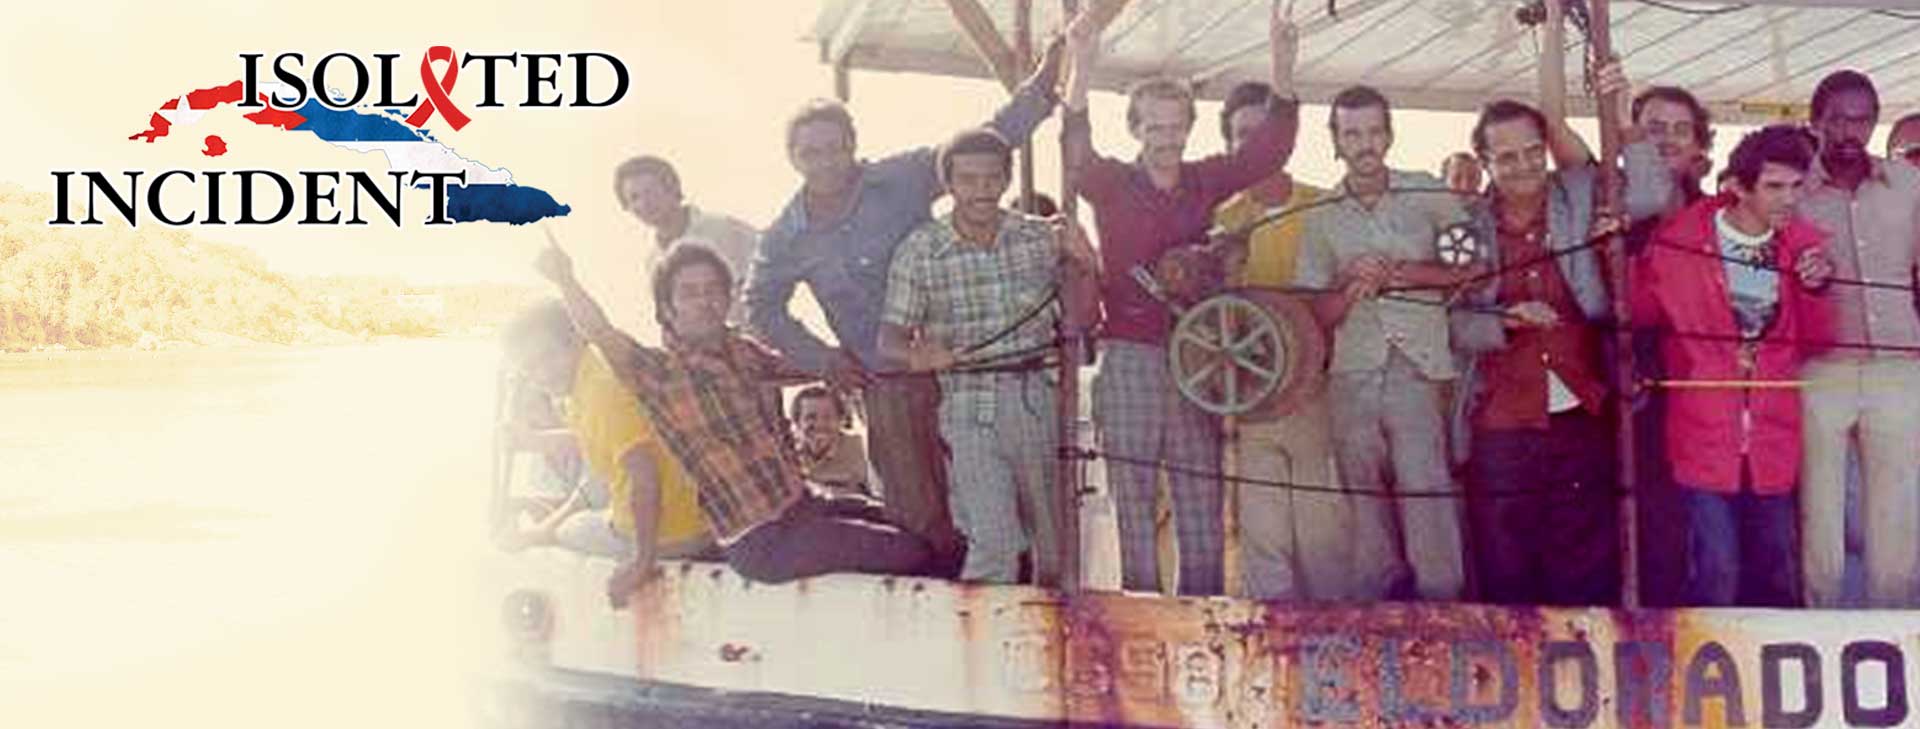 Cuban men on a boat